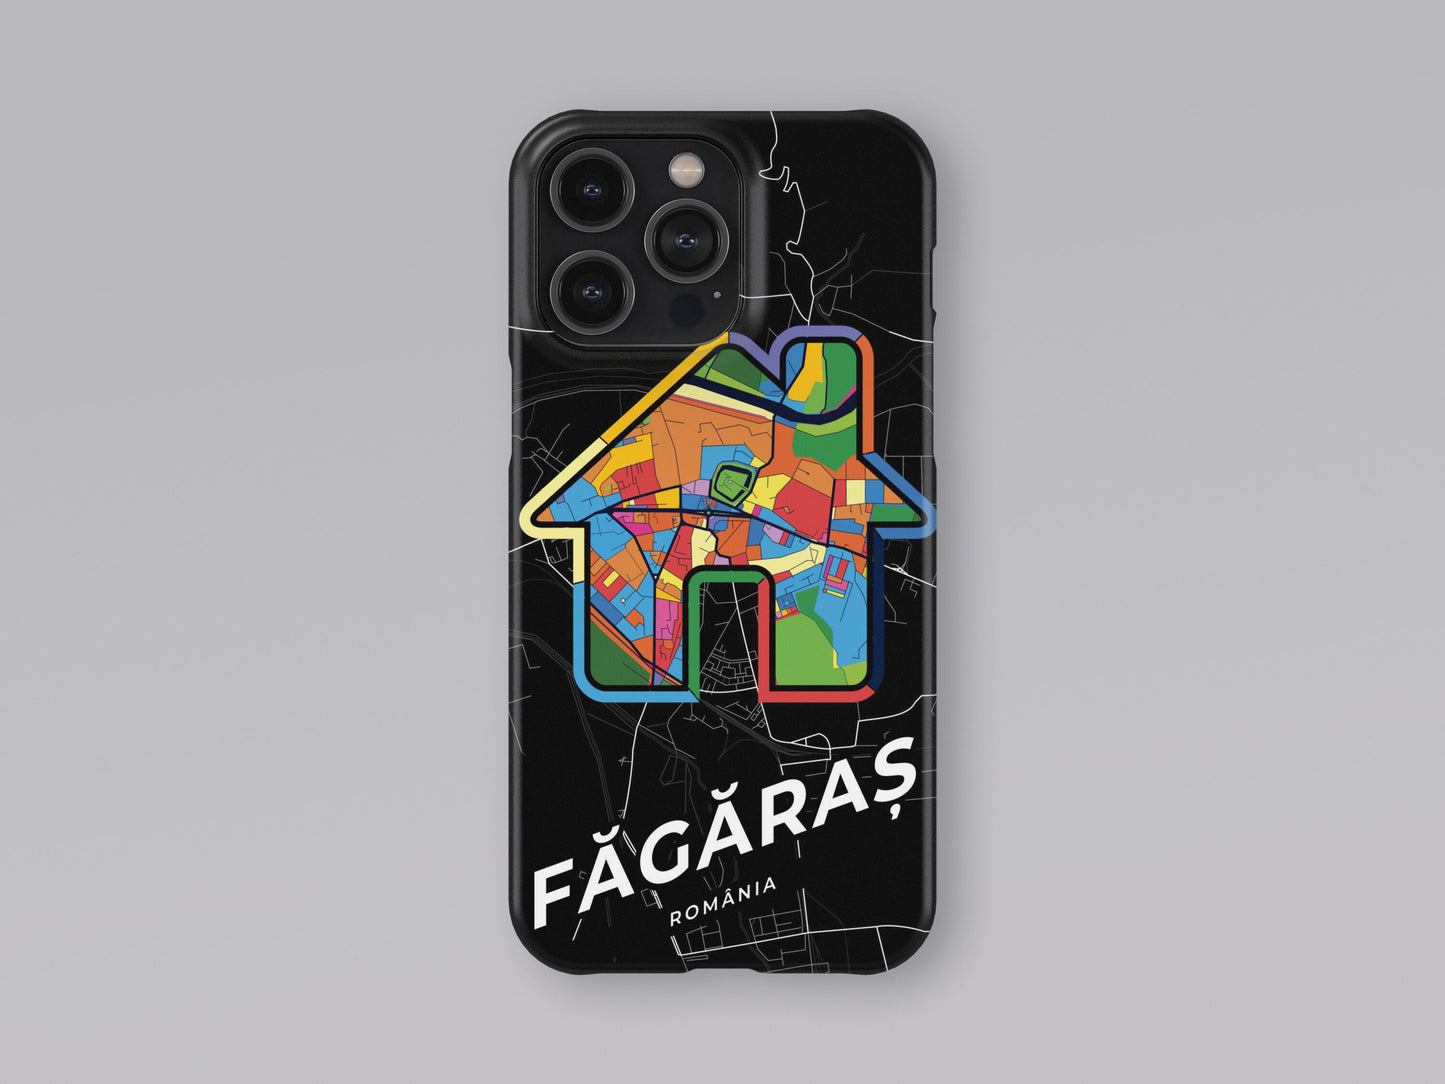 Făgăraș Romania slim phone case with colorful icon. Birthday, wedding or housewarming gift. Couple match cases. 3